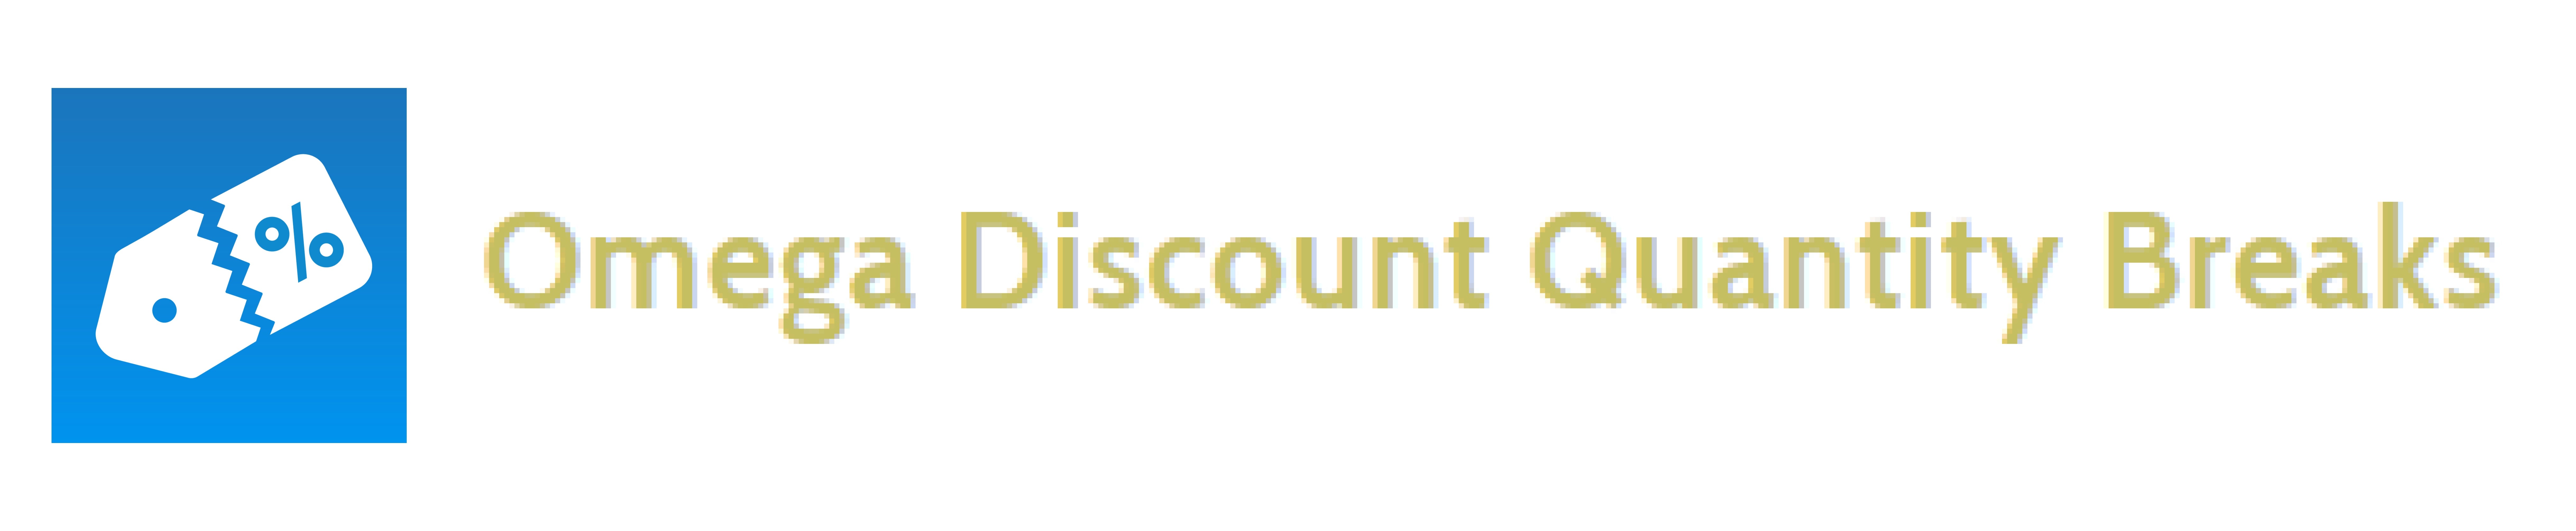 Omega Discount Quantity Breaks